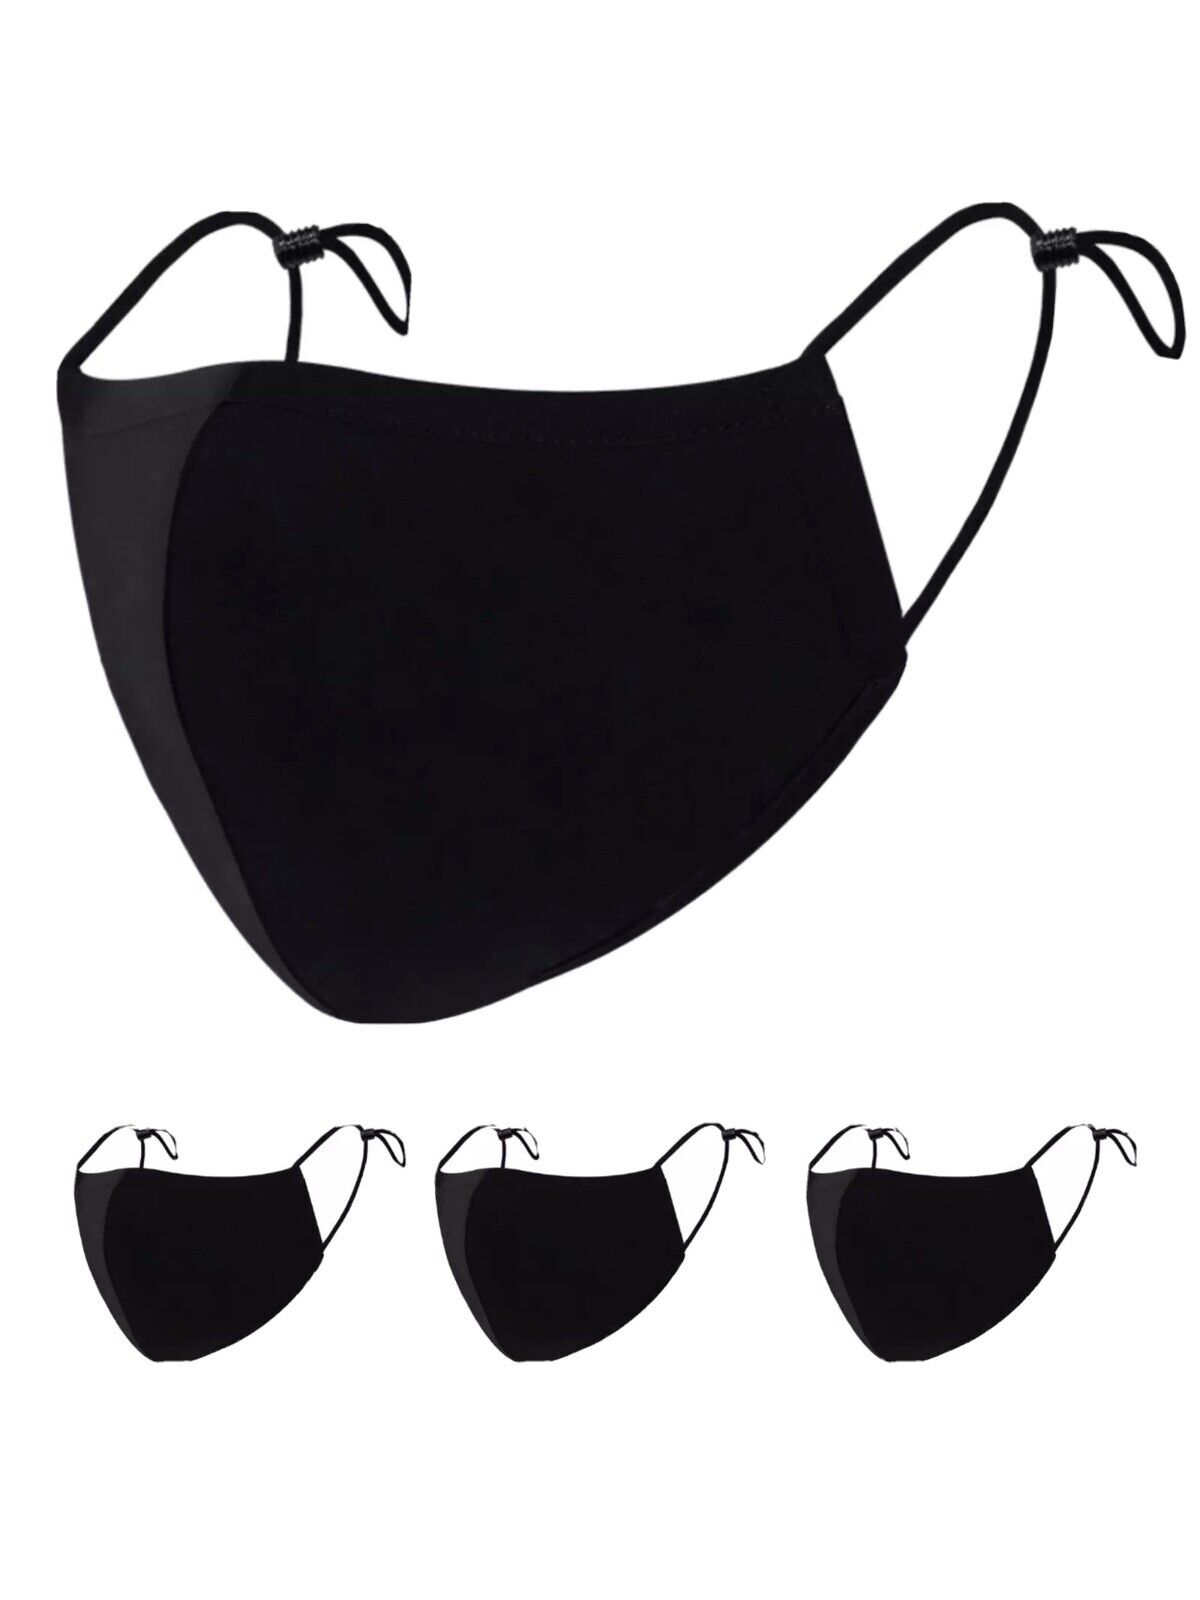 8 Face Masks Black Cotton Adult Mask Adjustable Elastic Loops Washable Reusable Unbranded - фотография #2